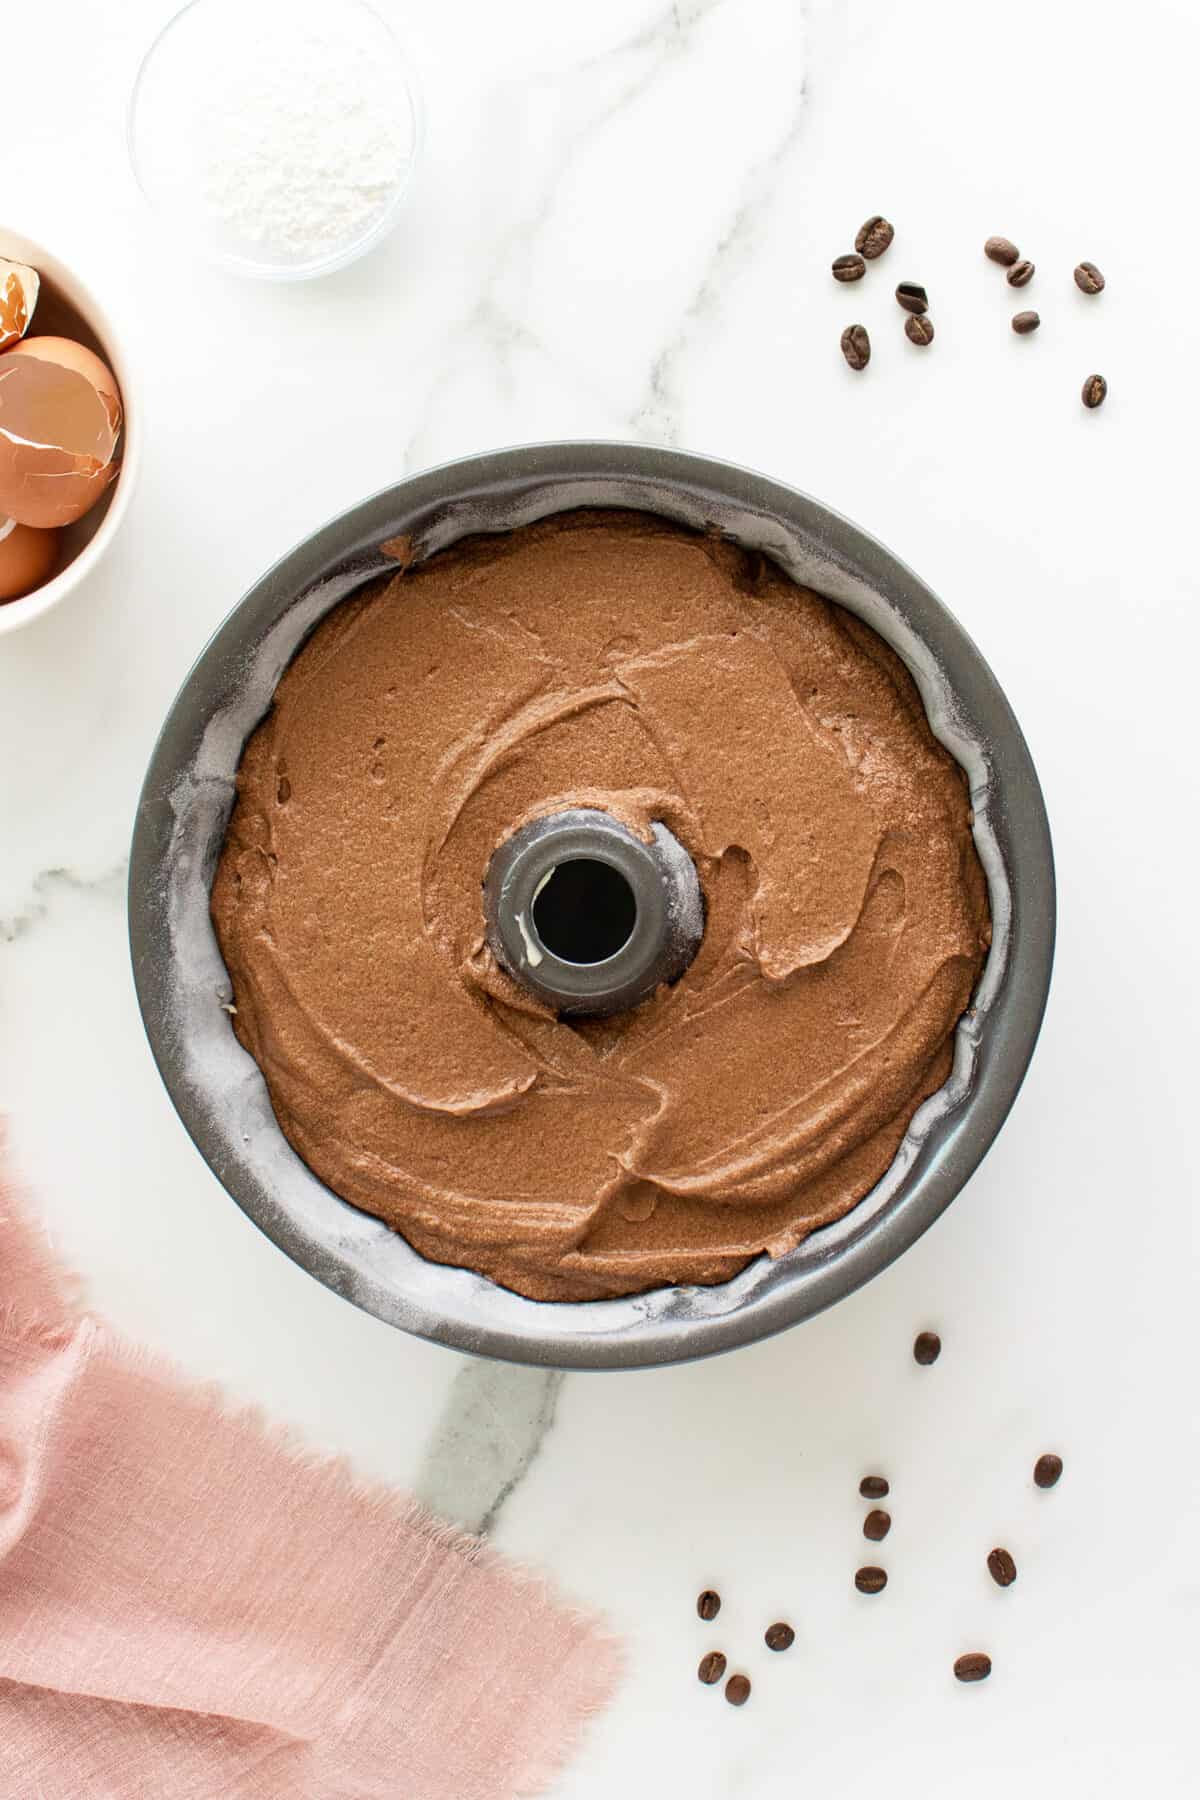 Chocolate pound cake batter in pan